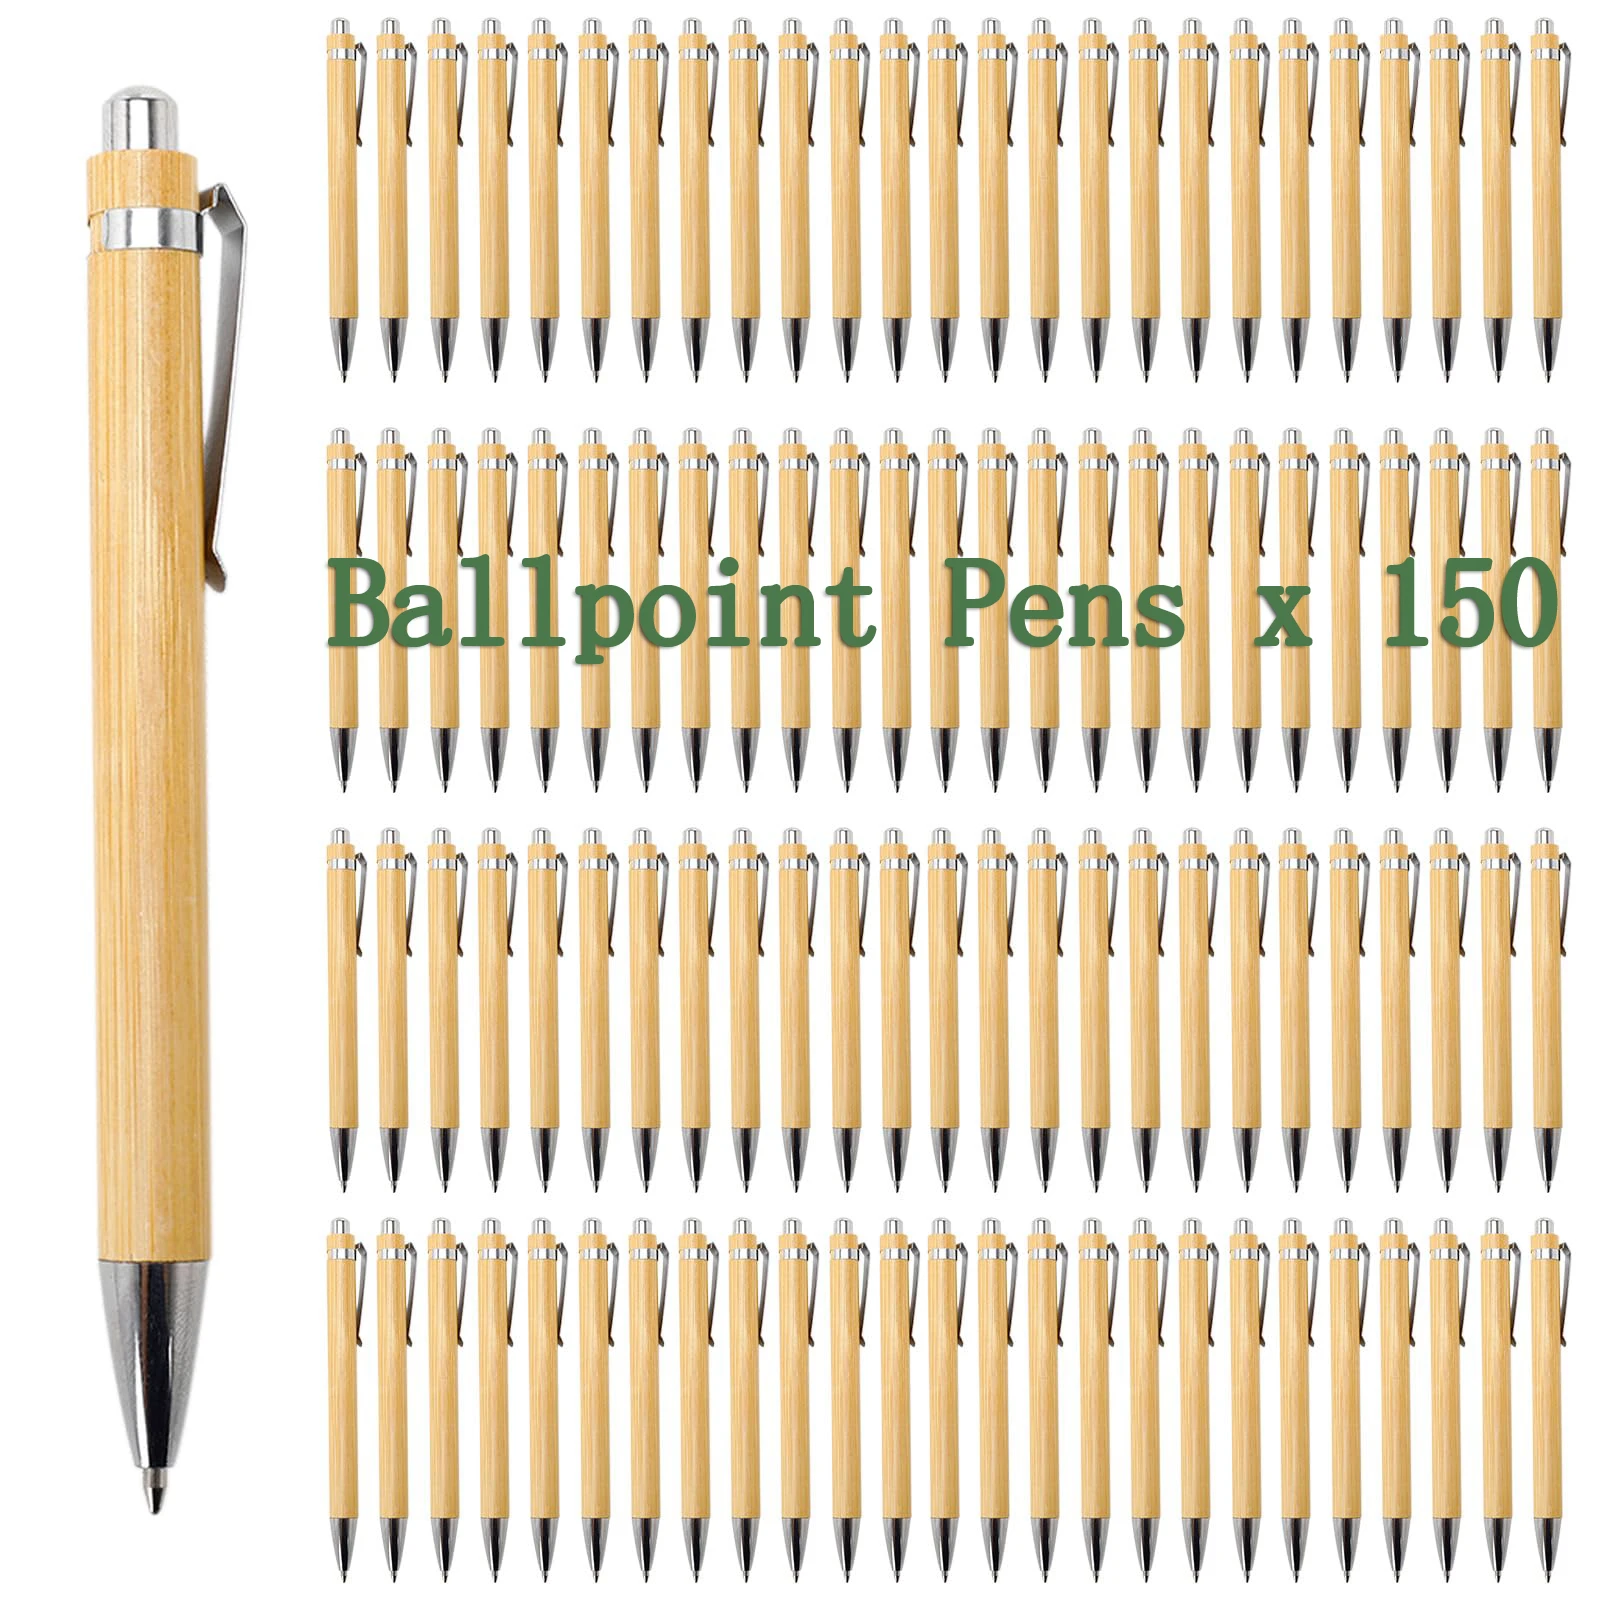 

150Pcs Pcs/Lot Bamboo Ballpoint Pen Stylus Contact Pen Office & School Supplies Pens & Writing Supplies Gifts-Blue Ink